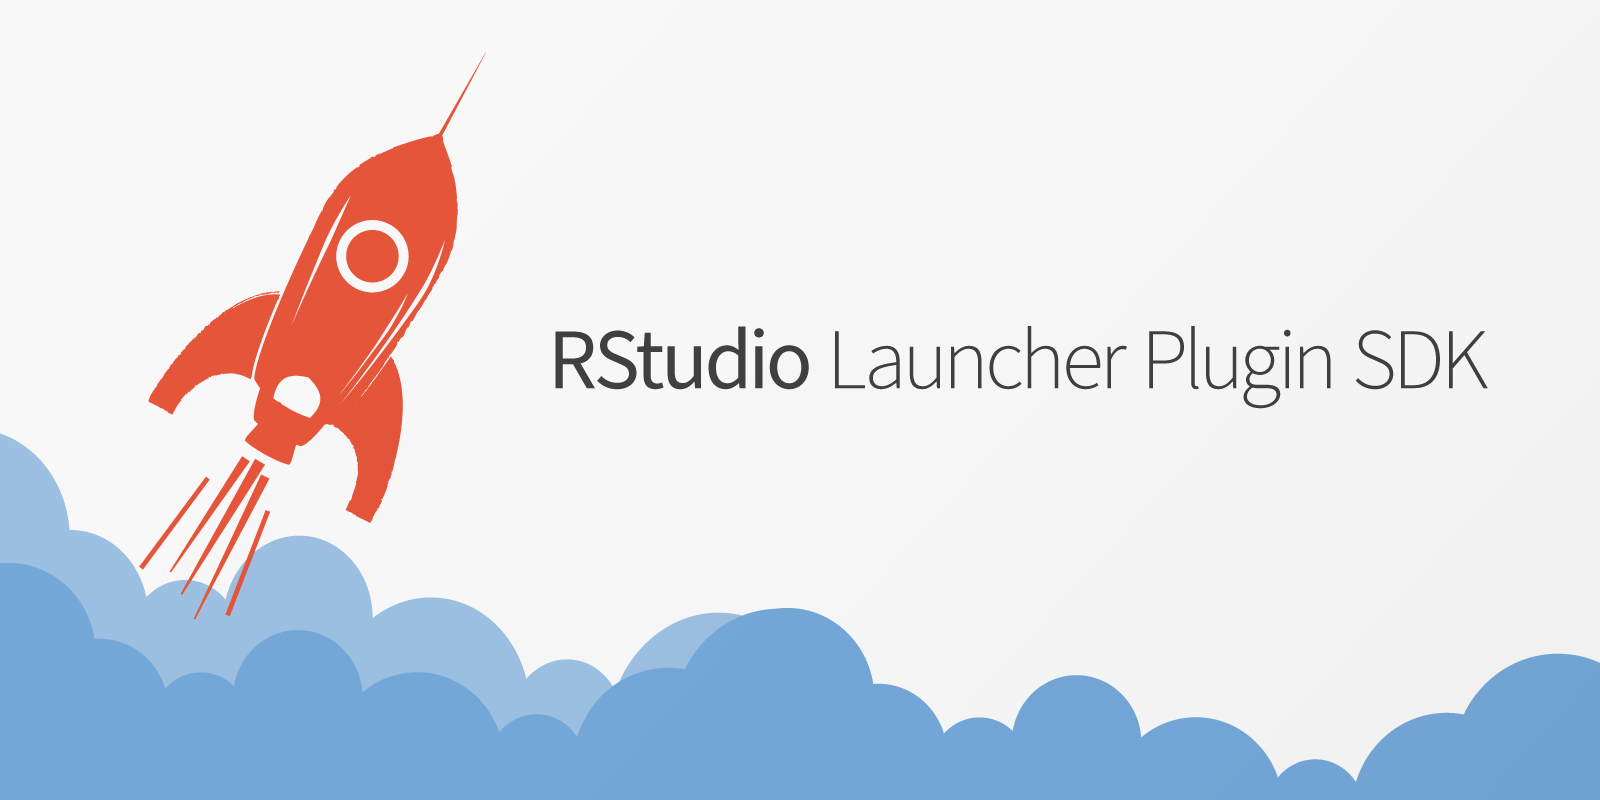 RStudio Launcher Plugin SDK Logo